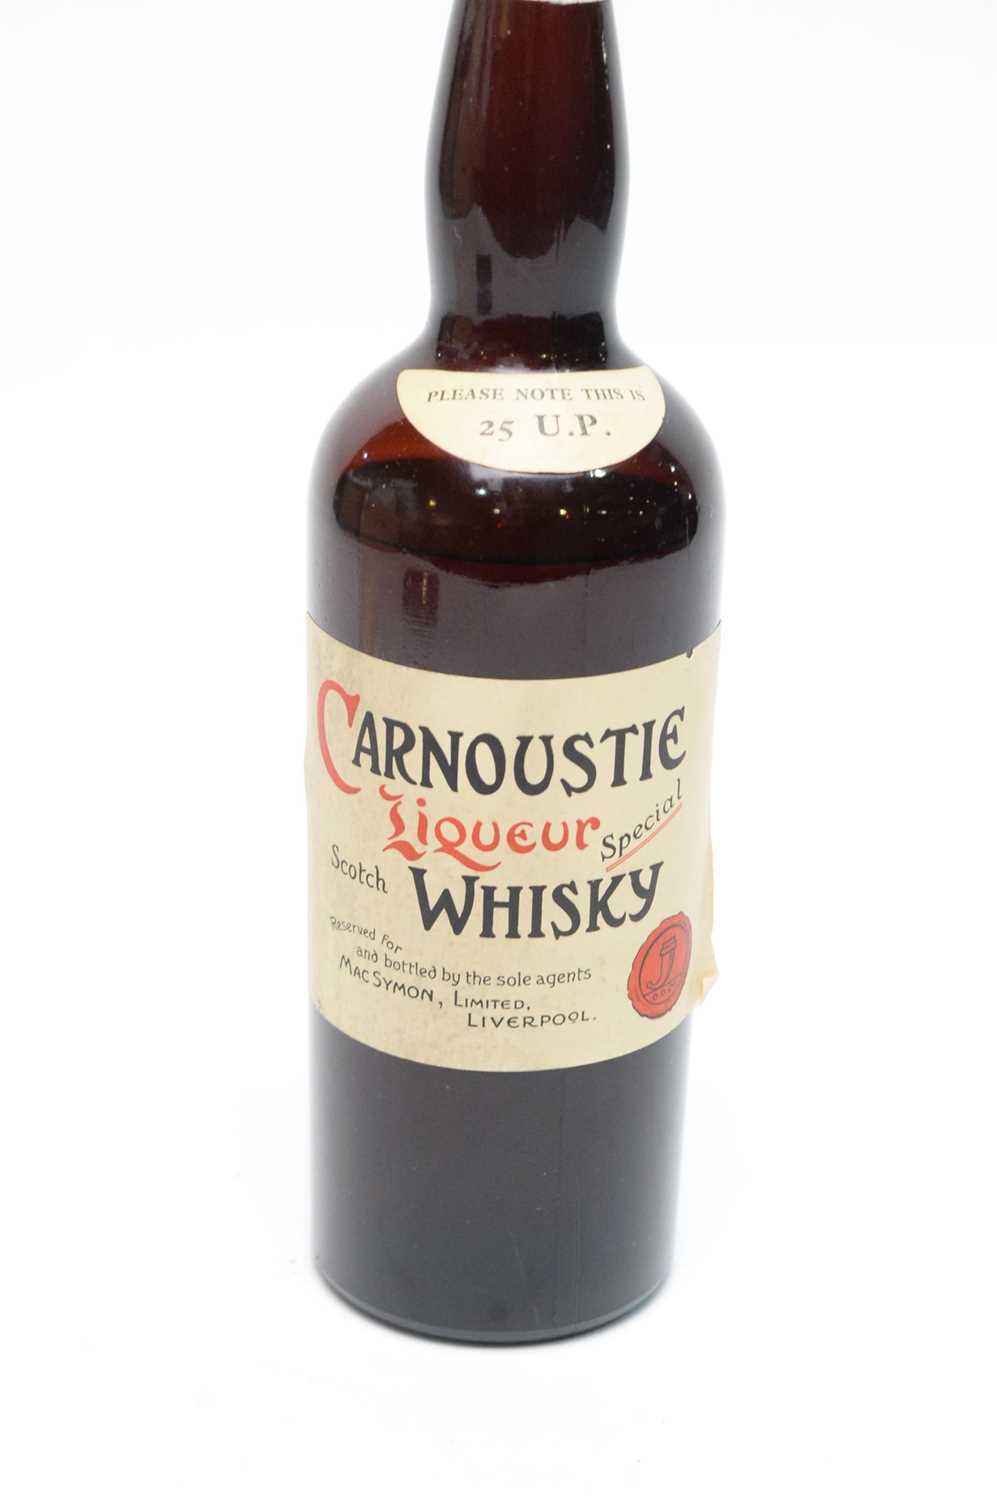 Carnoustie Liqueur Special Scotch Whisky, one bottle - Image 2 of 8